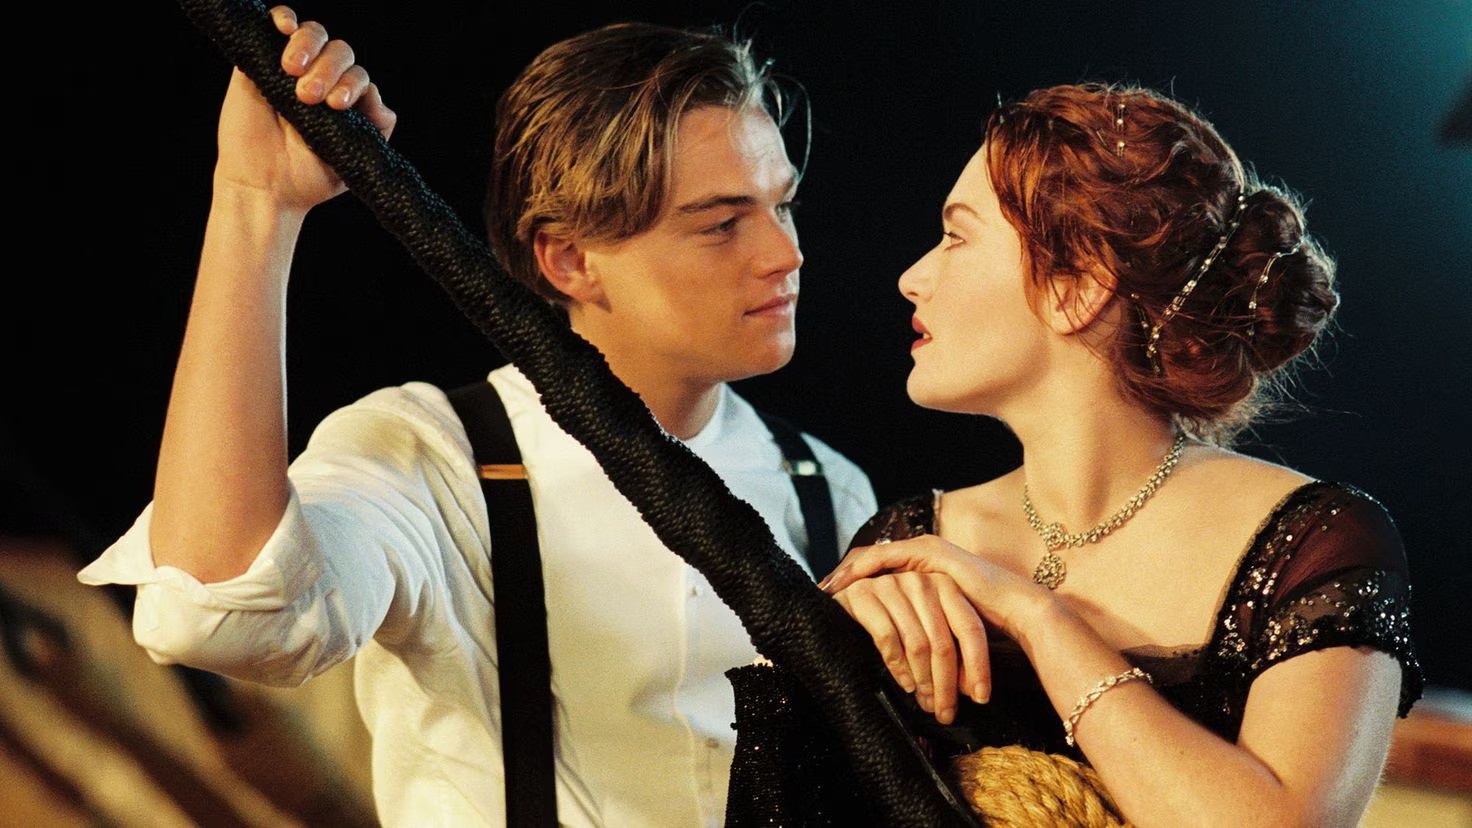 Titanic (1997) – Leonardo DiCaprio and Kate Winslet